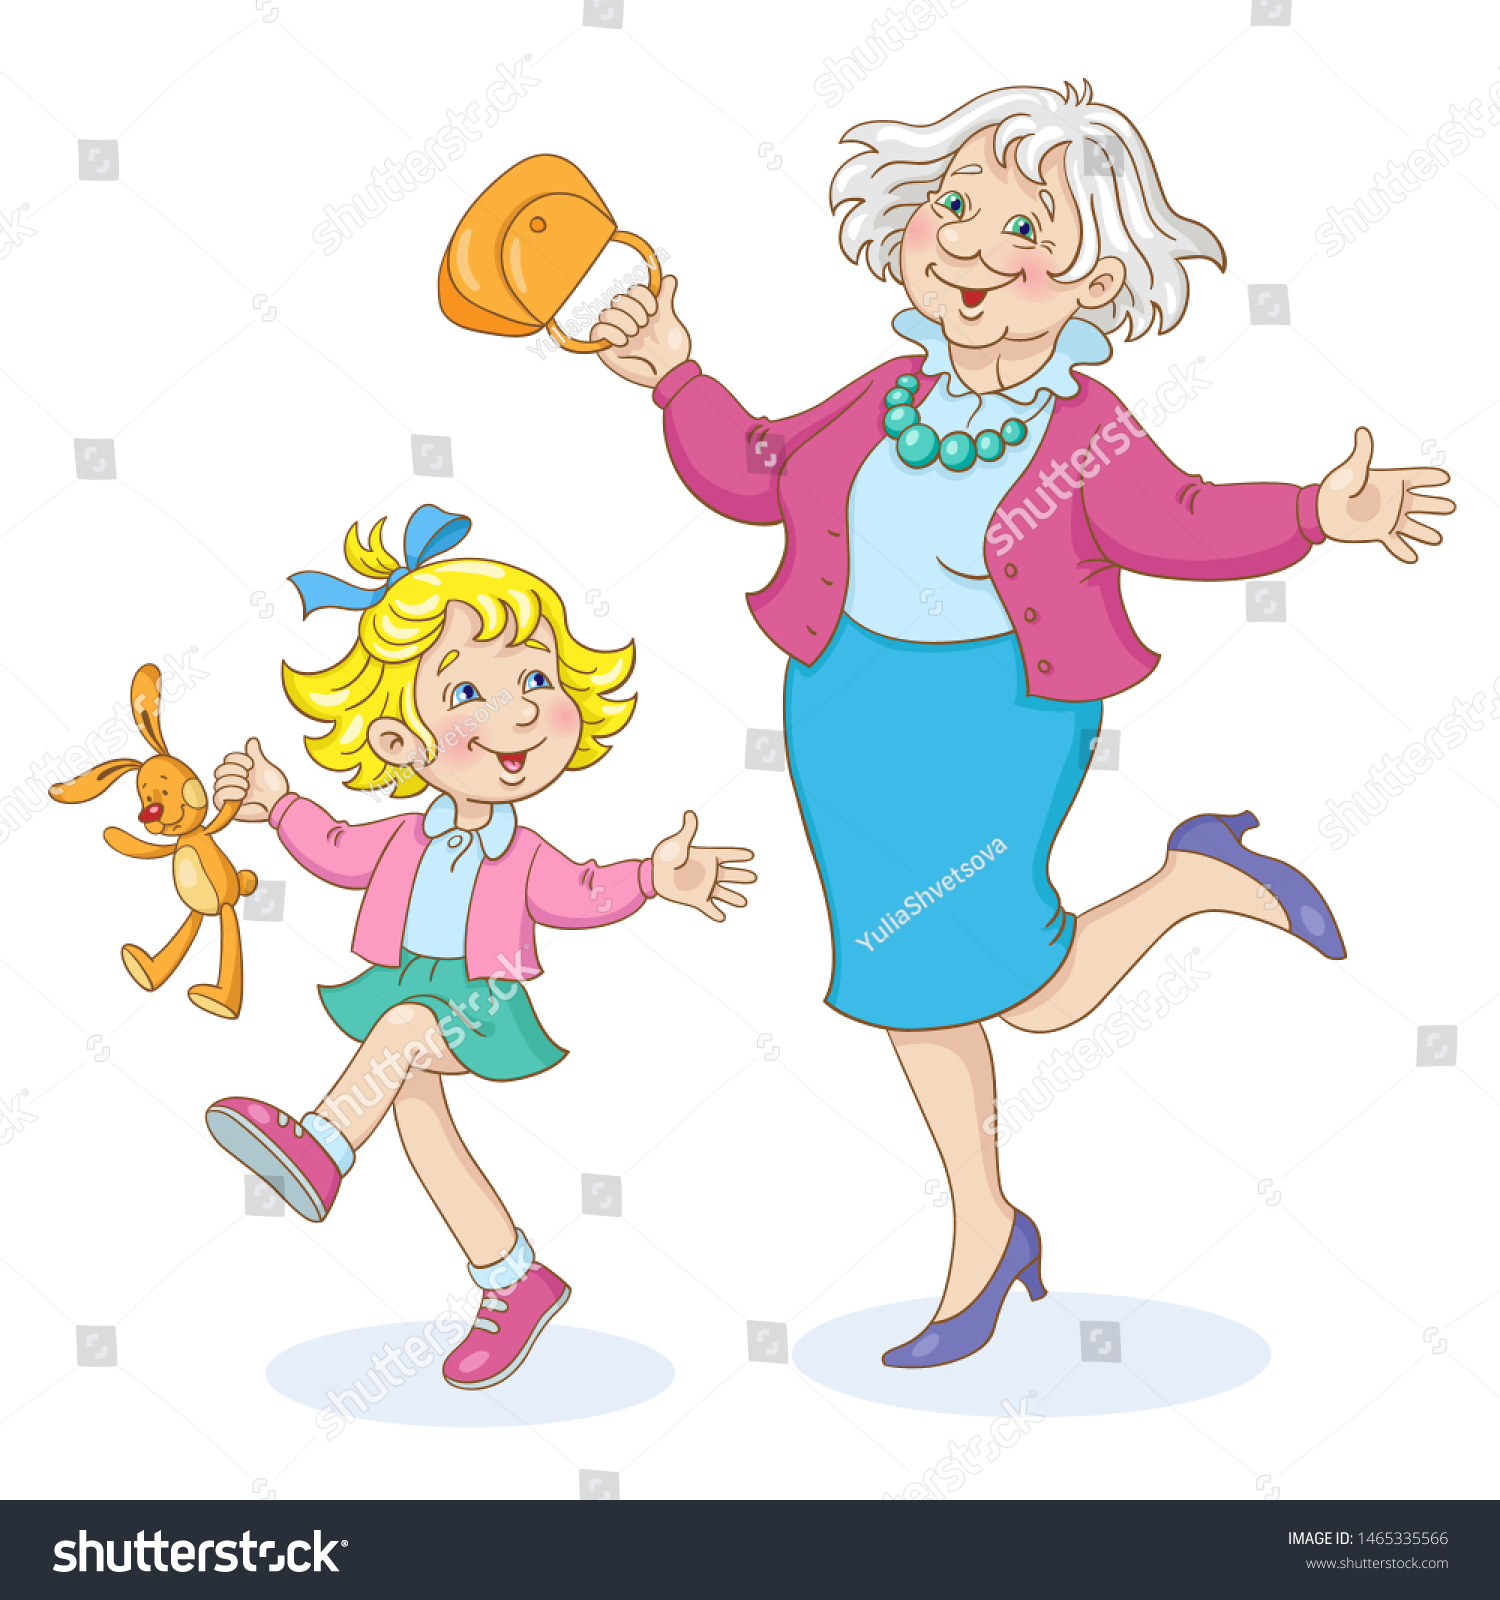 Grandmother And Granddaughter Cartoon Images - SamanthaOtani